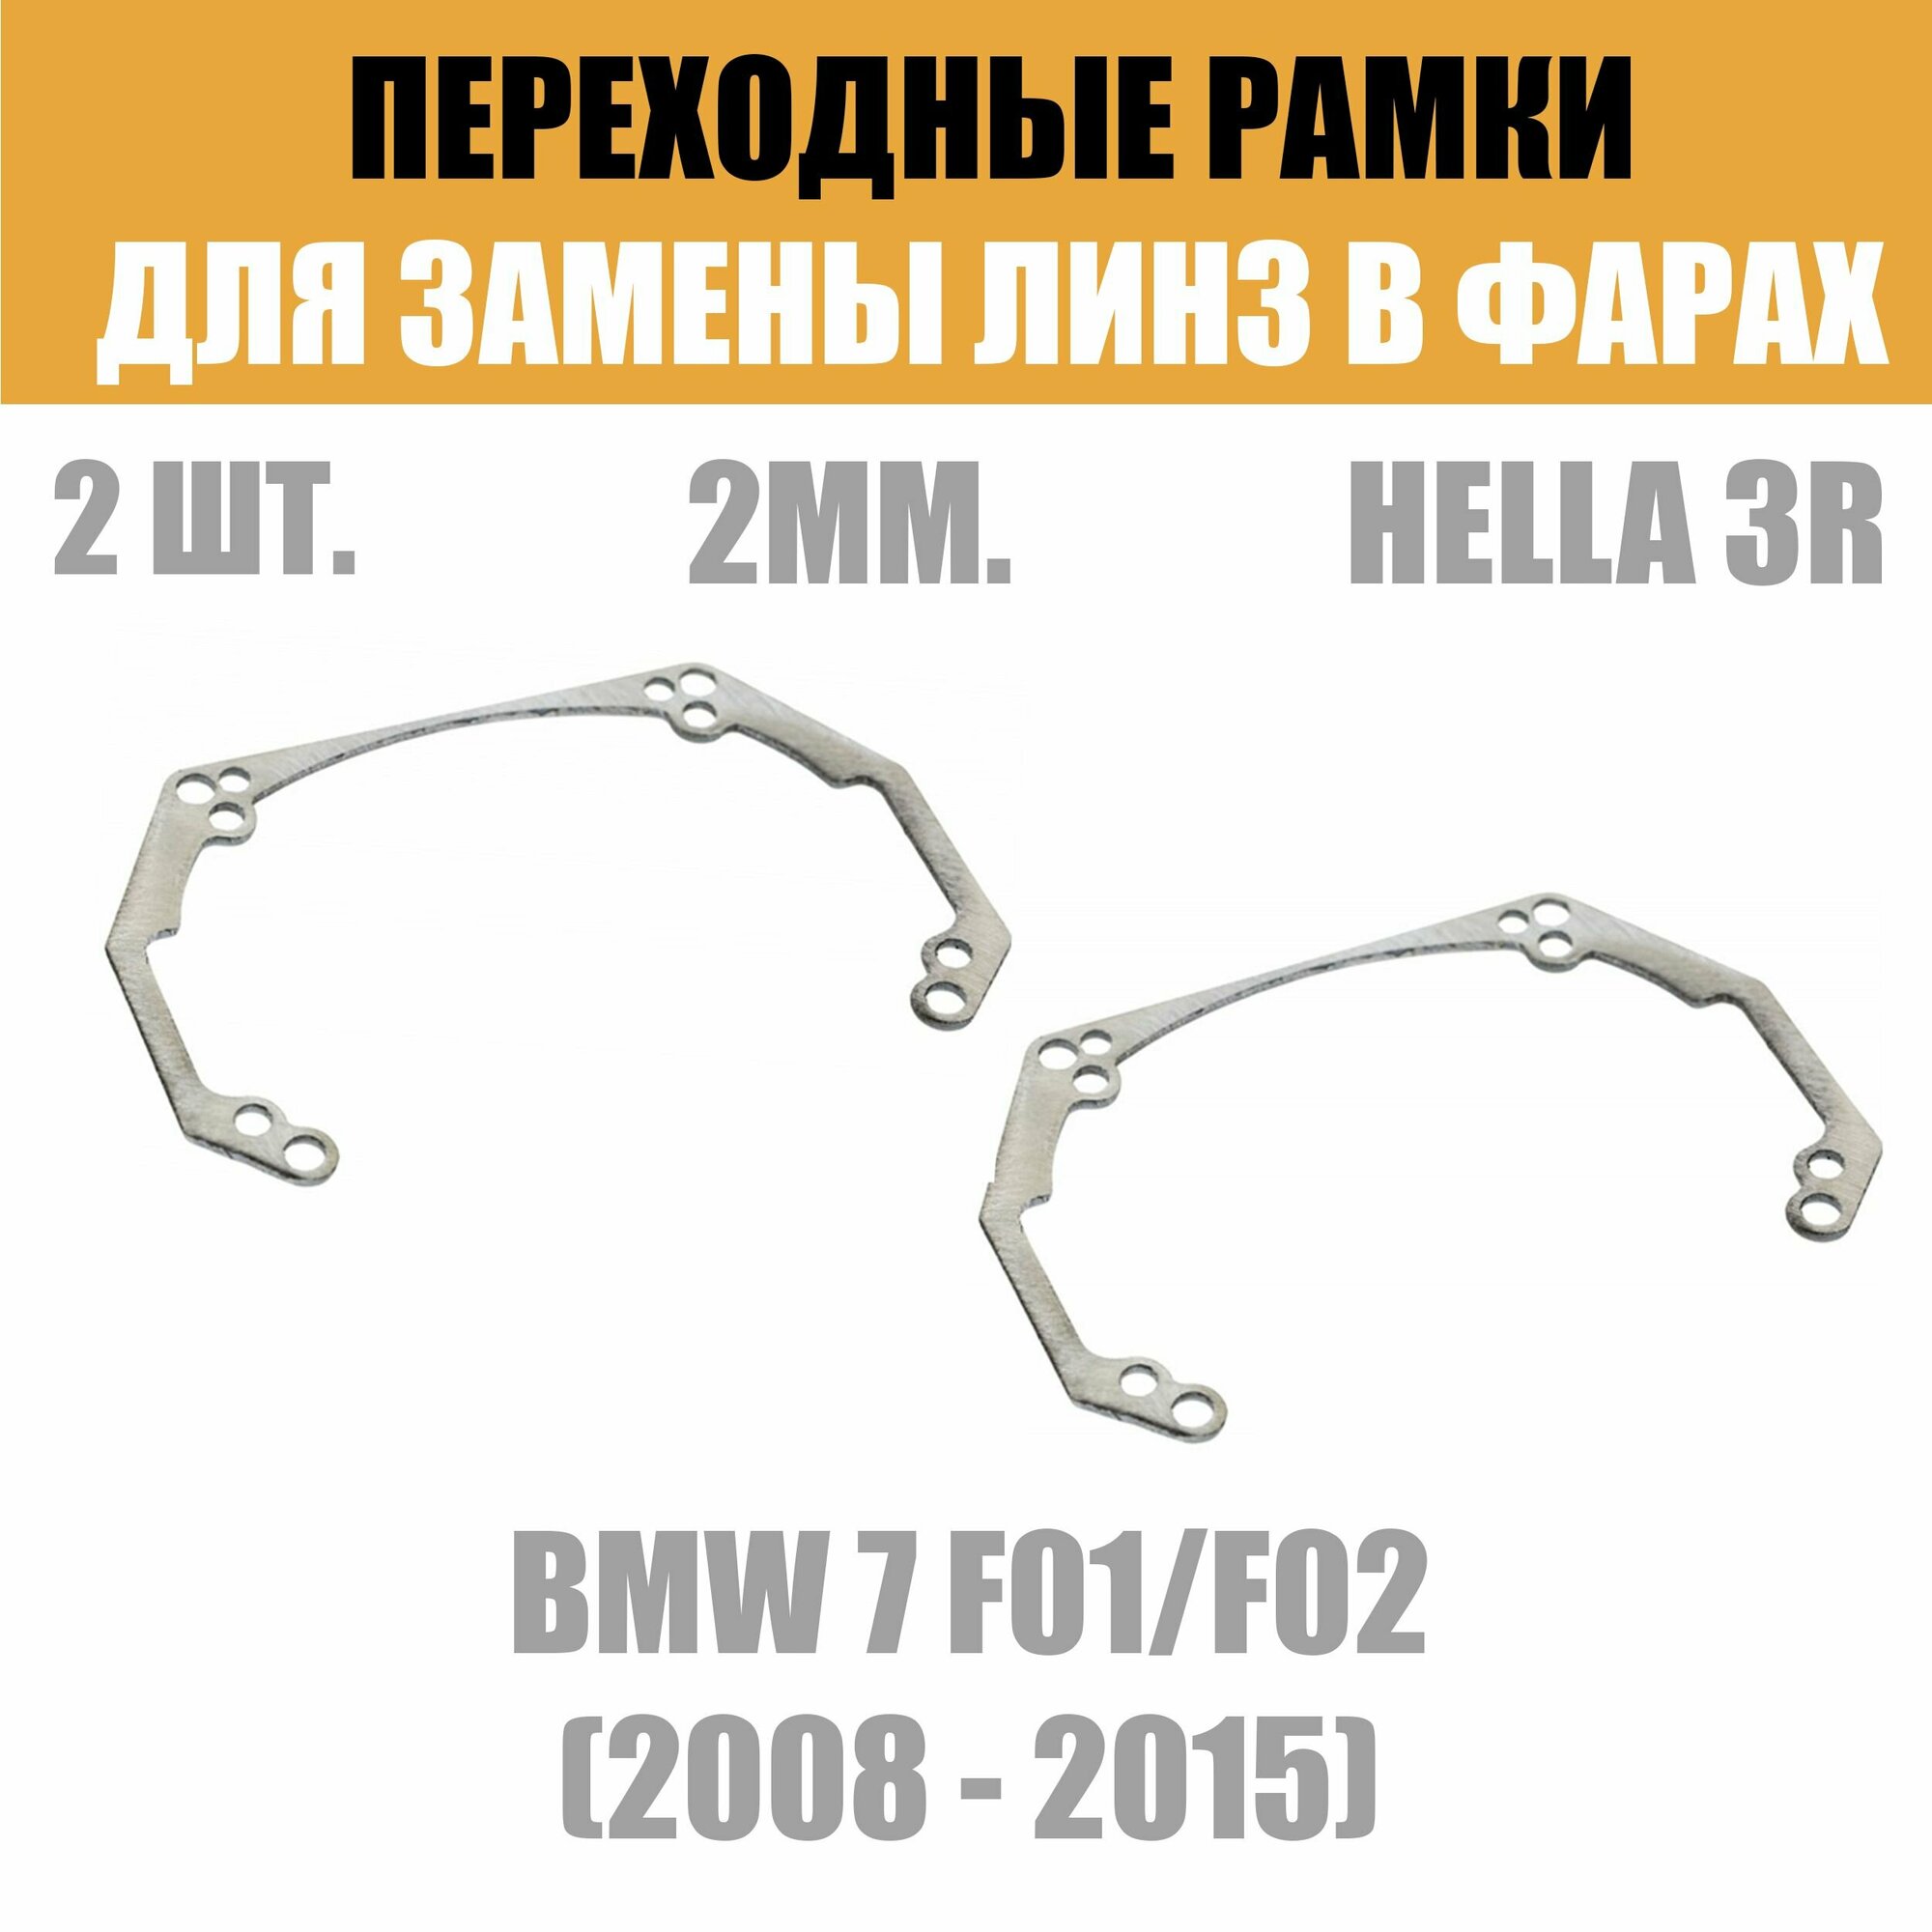 Переходные рамки для линз №41 на BMW 7 F01 F02 (2008 - 2015) под модуль Hella 3R/Hella 3 (Комплект 2шт)